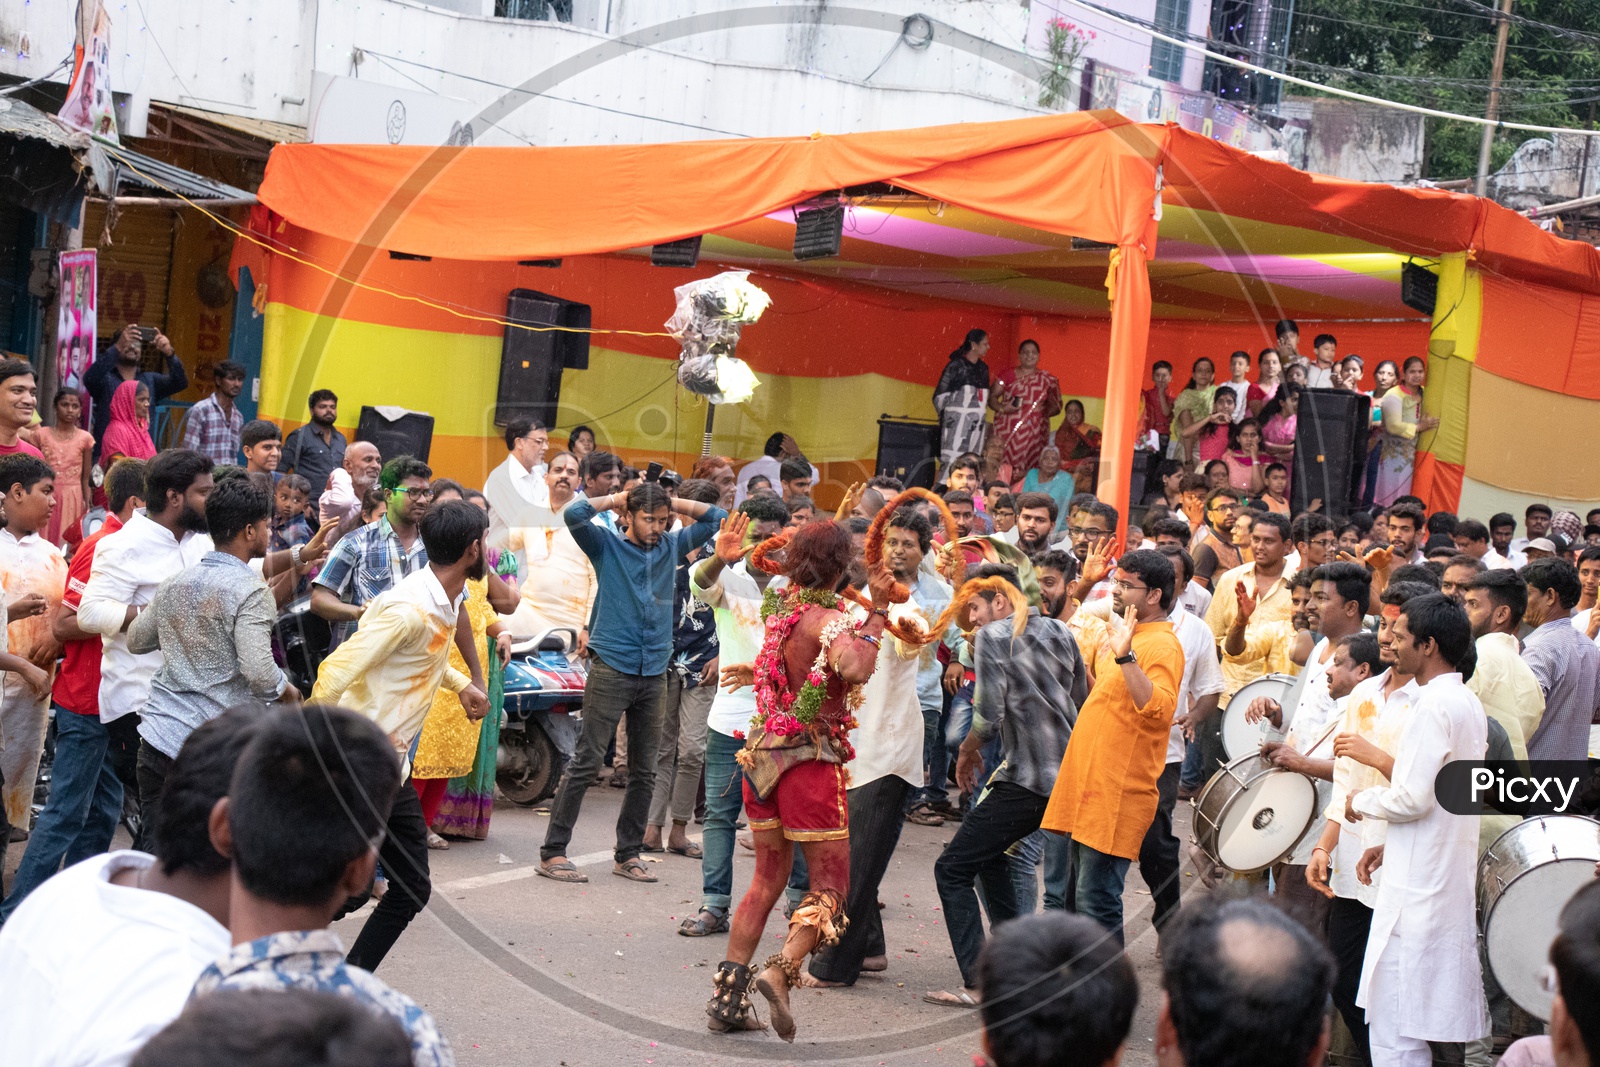 Pothuraju Surrounded By Crowd During Bonalu Festival Celebrations